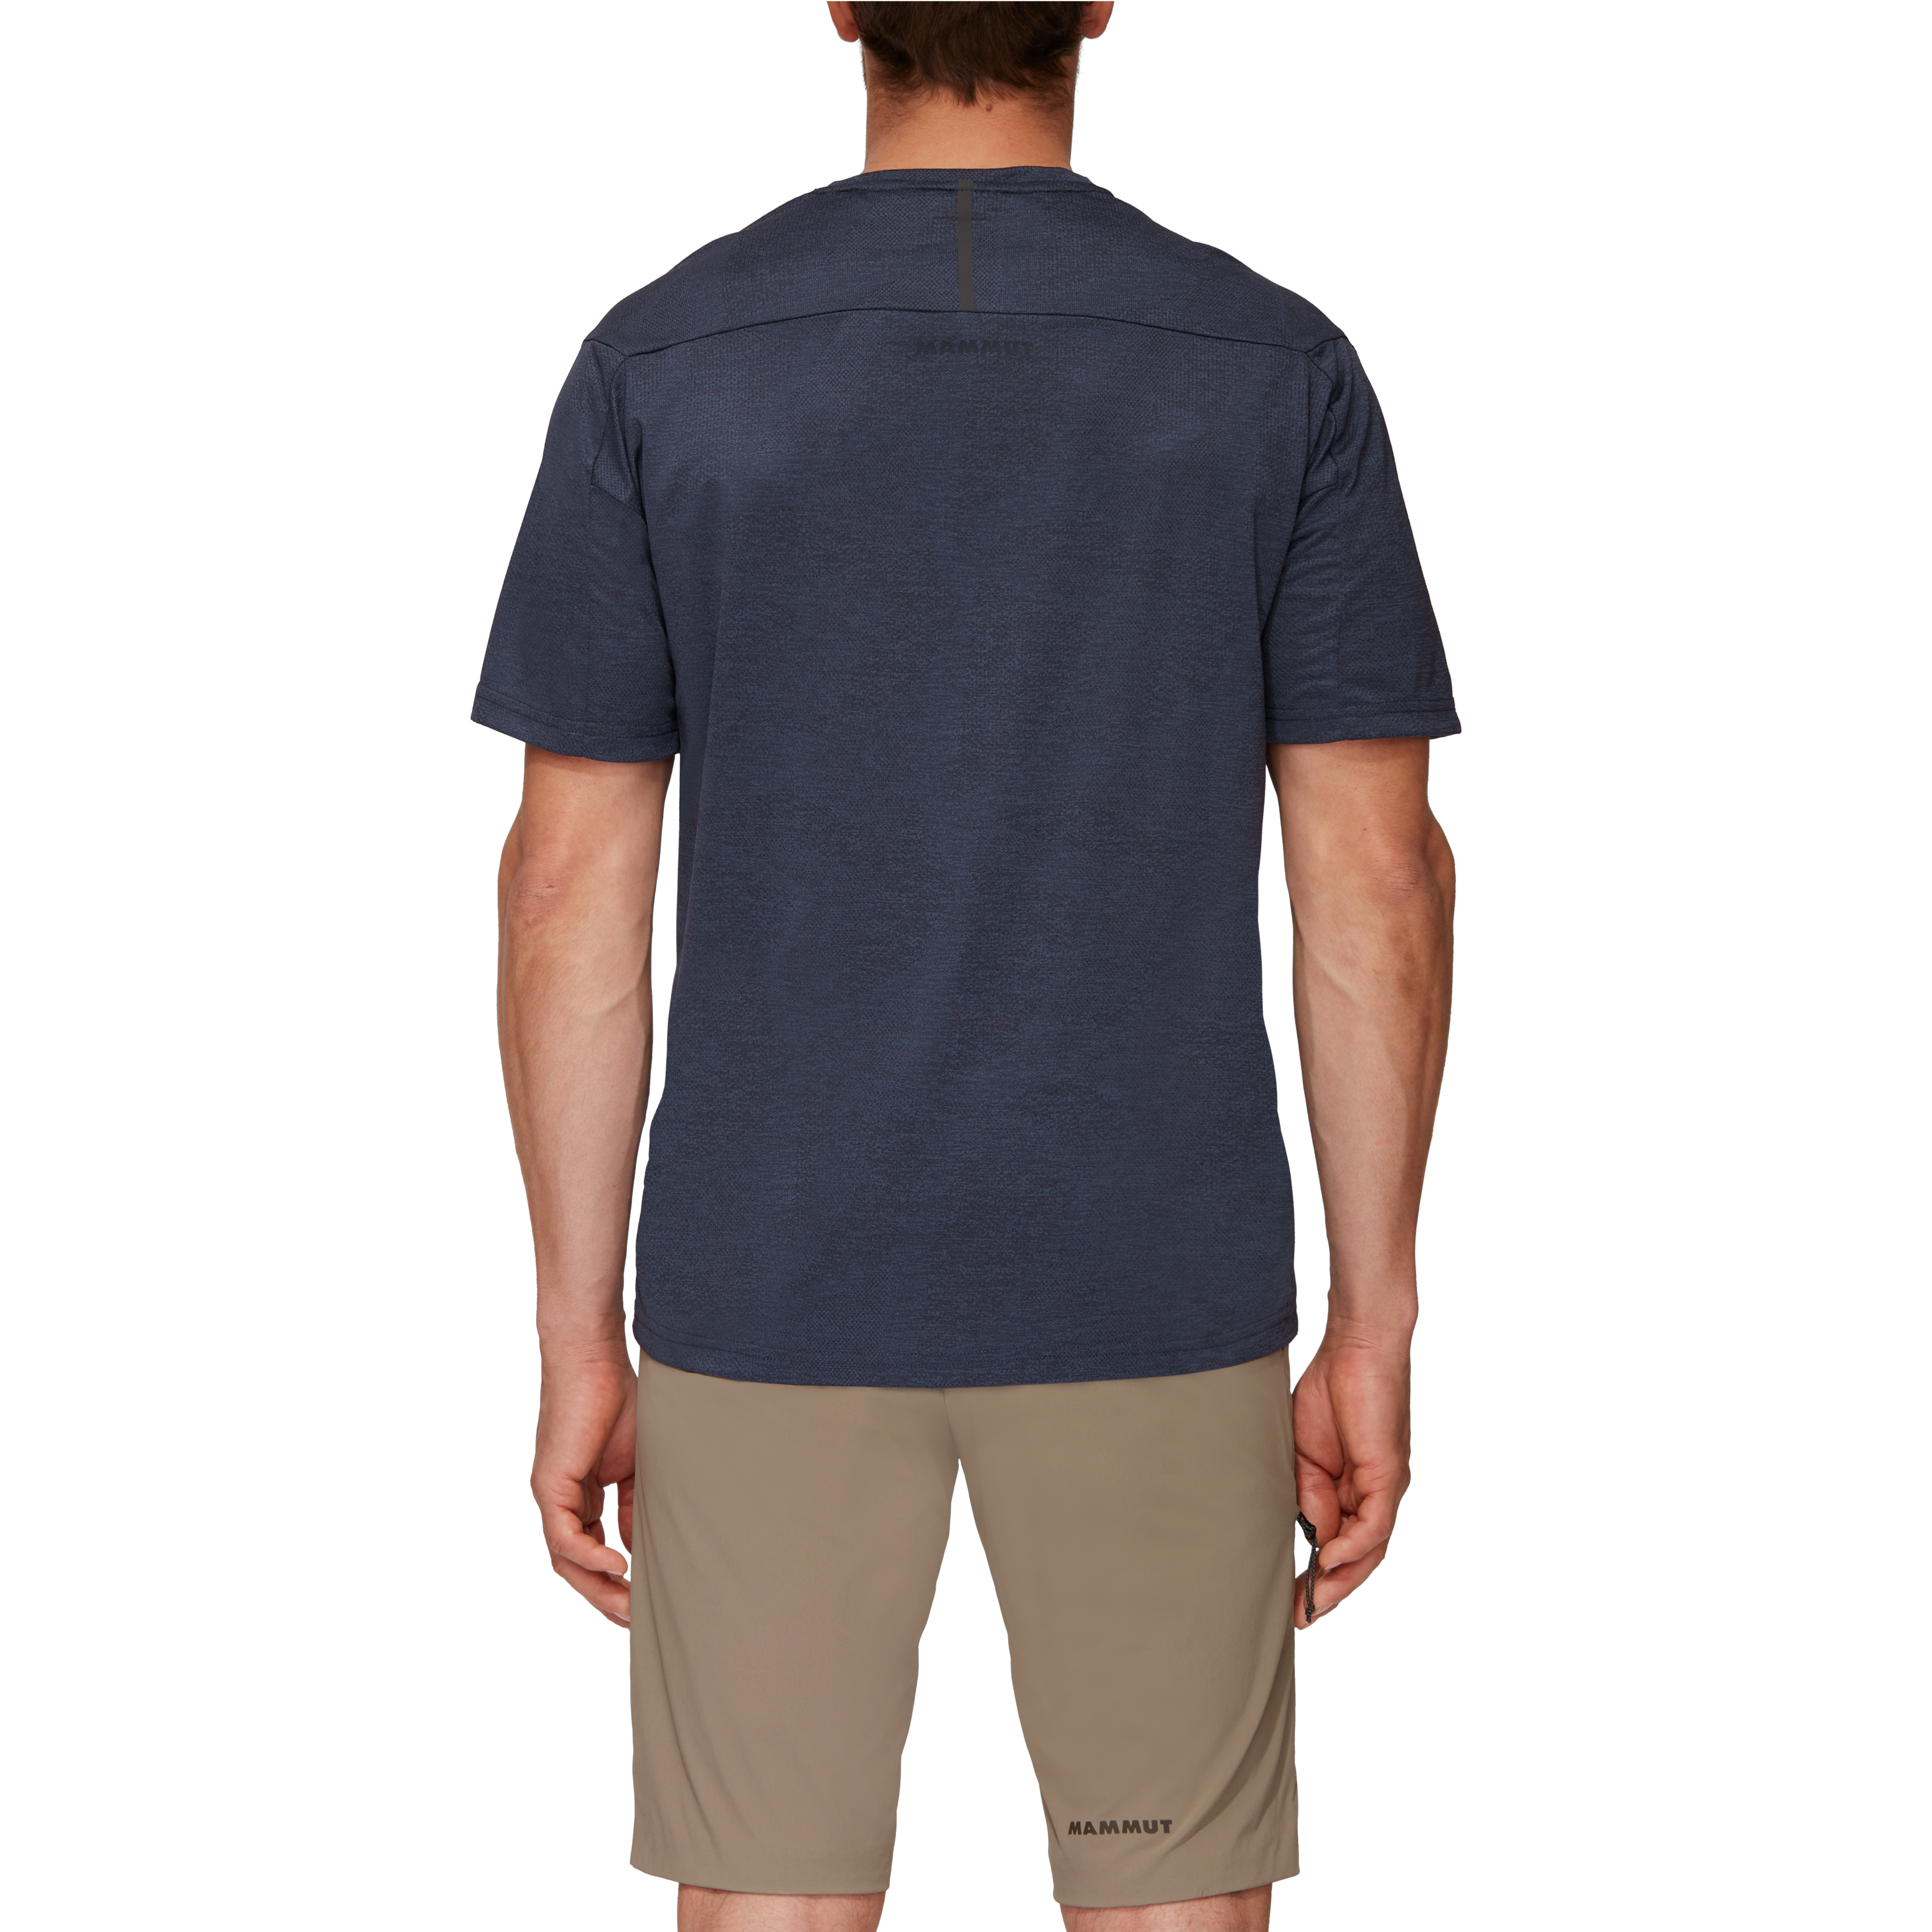 Crashiano T-Shirt Men product image